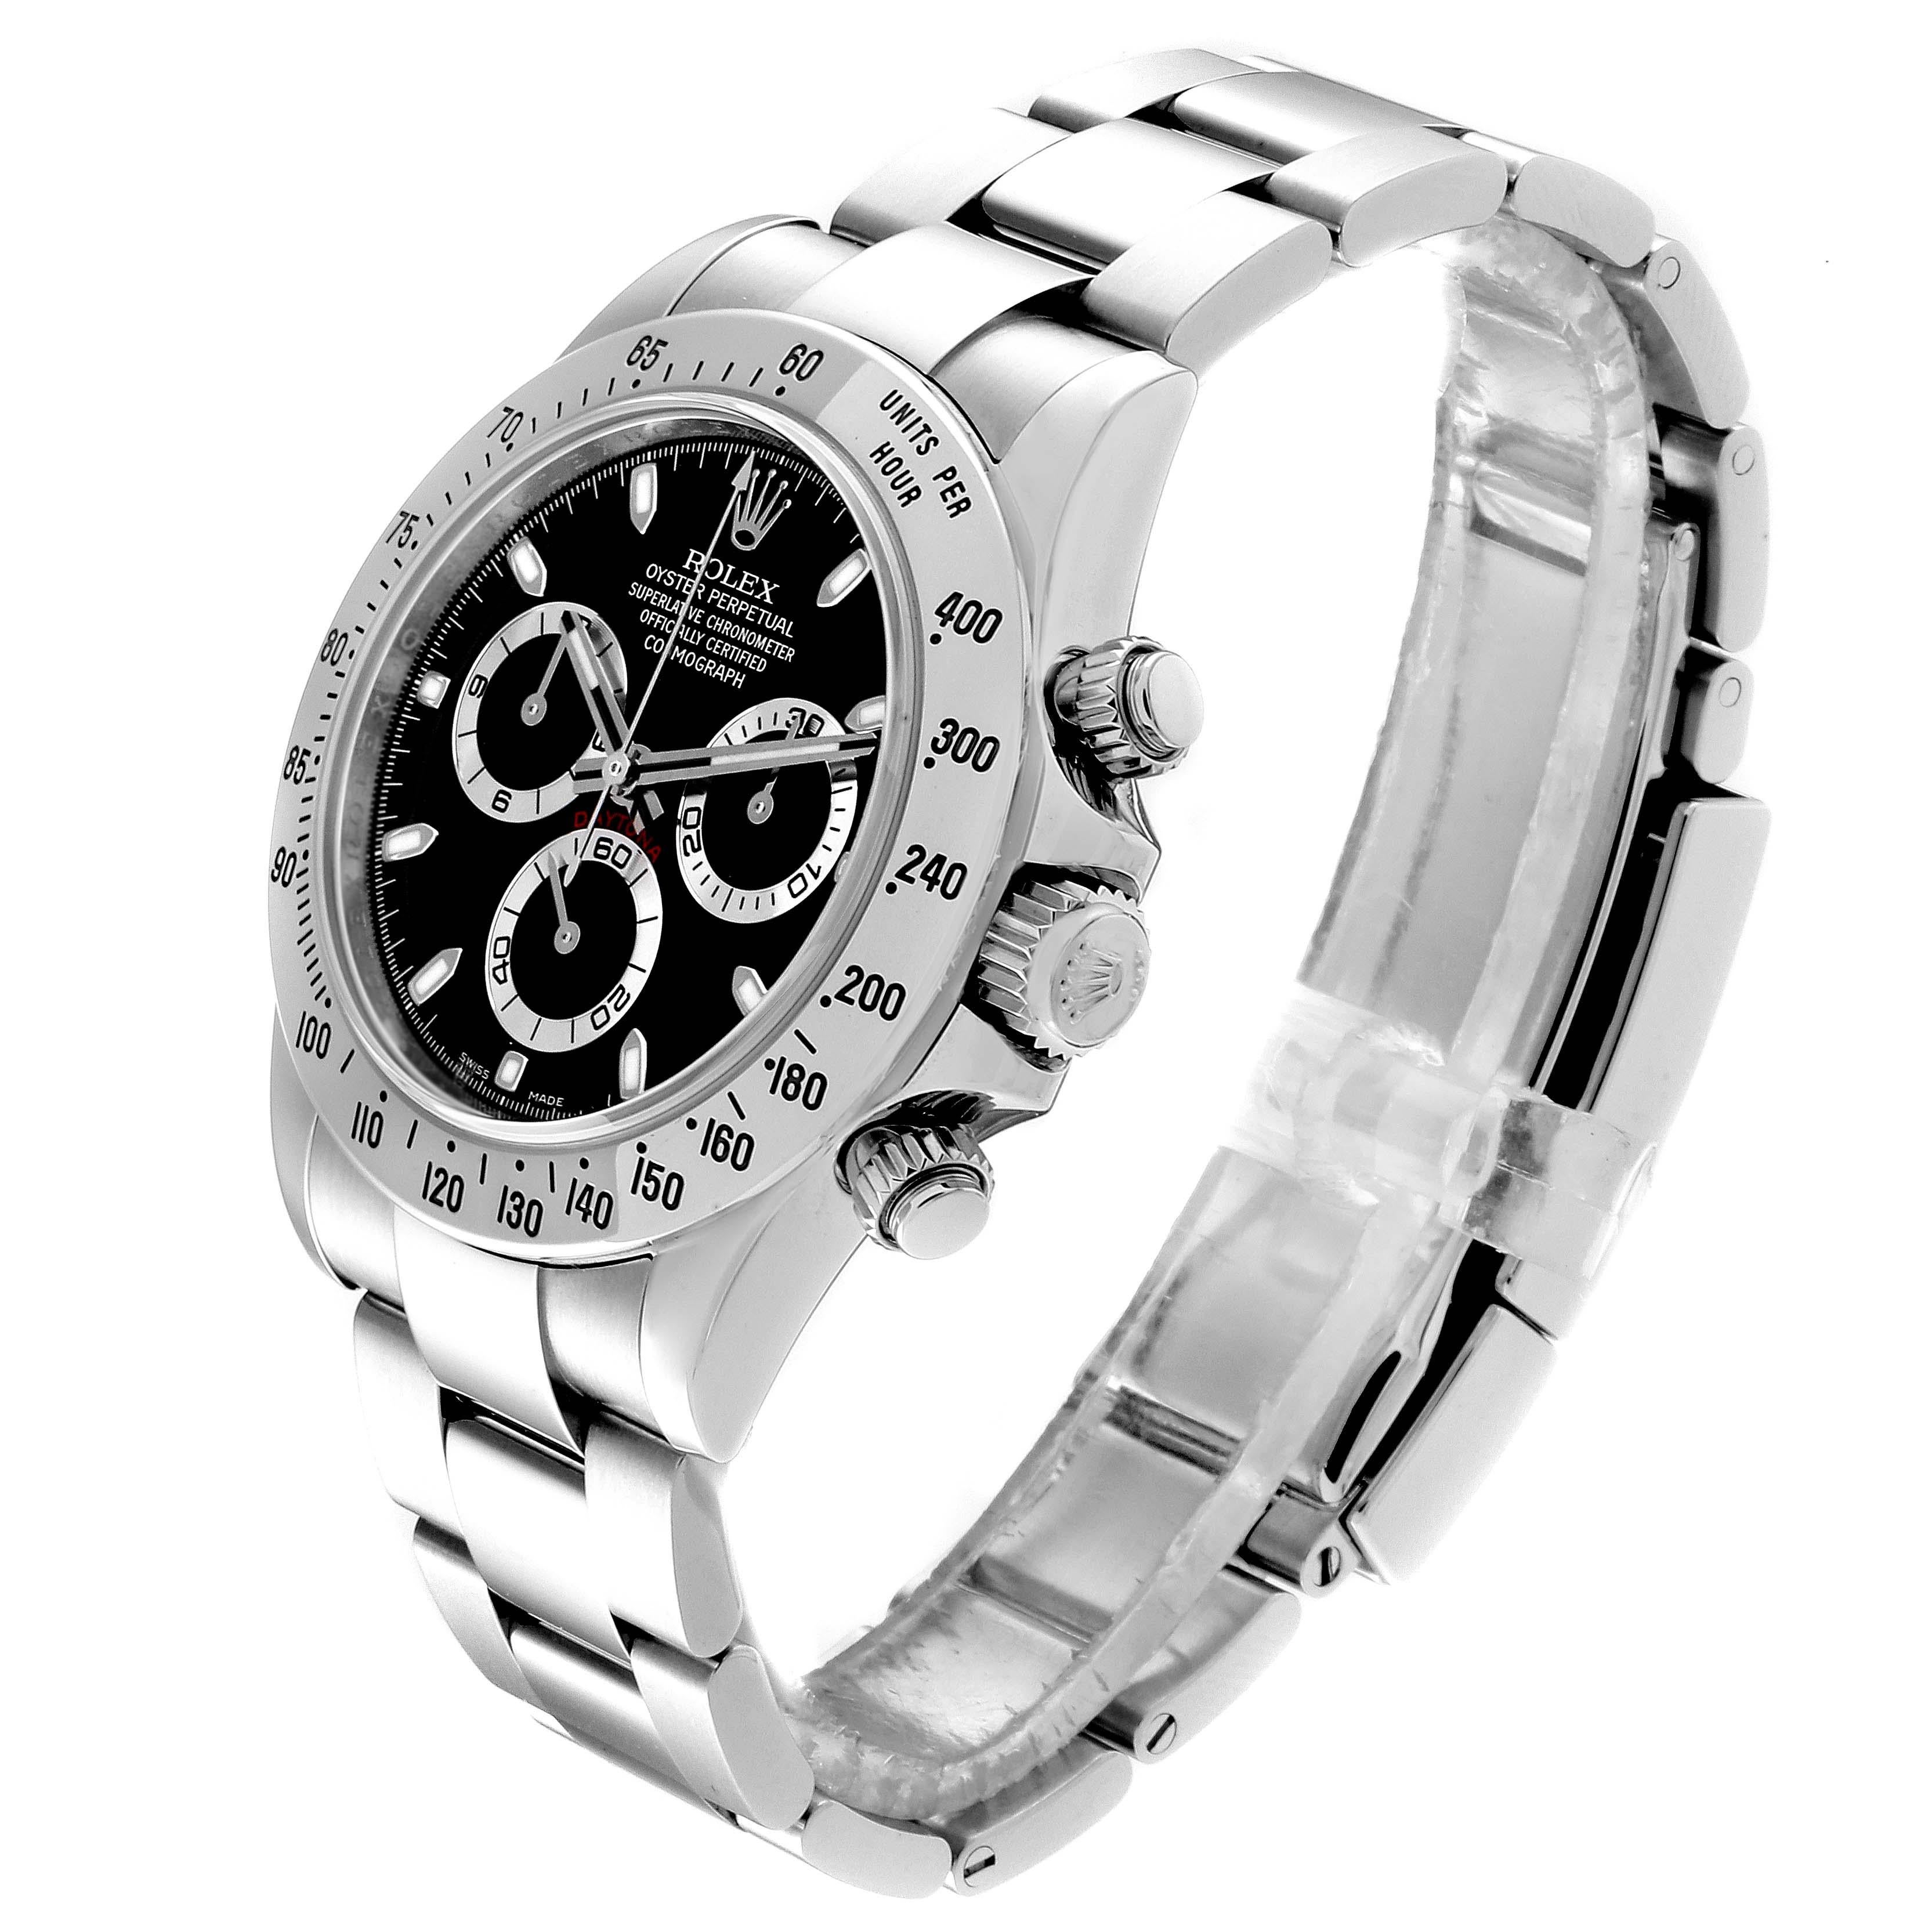 Rolex Daytona Black Dial Chronograph Stainless Steel Men's Watch 116520 1